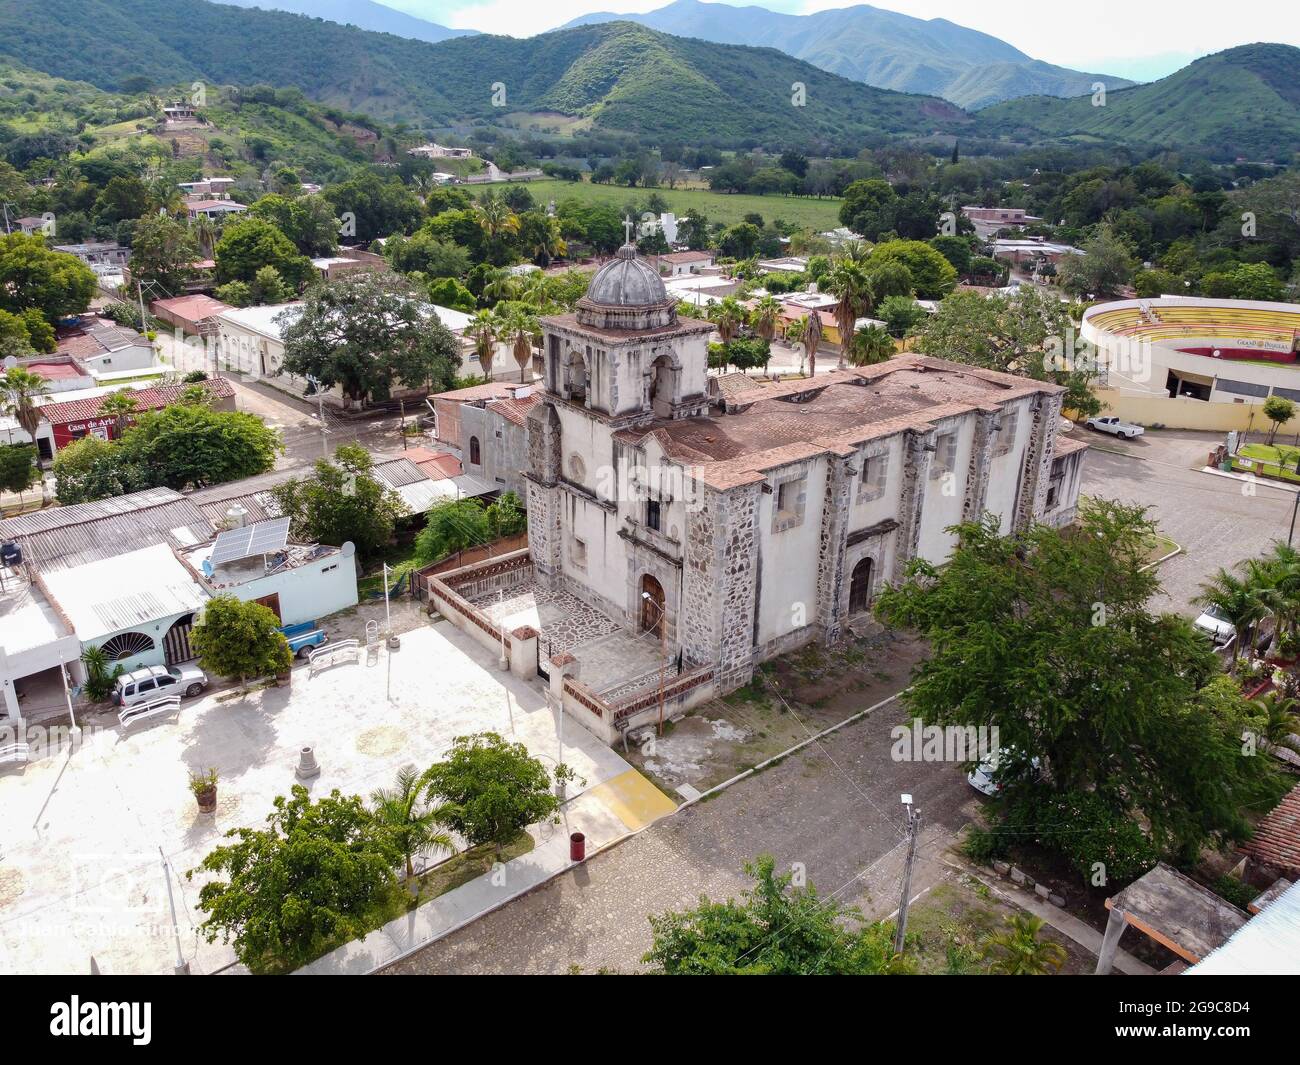 An aerial view of the Santa Catarina temple in Ahuachapan, Jalisco, Mexico Stock Photo